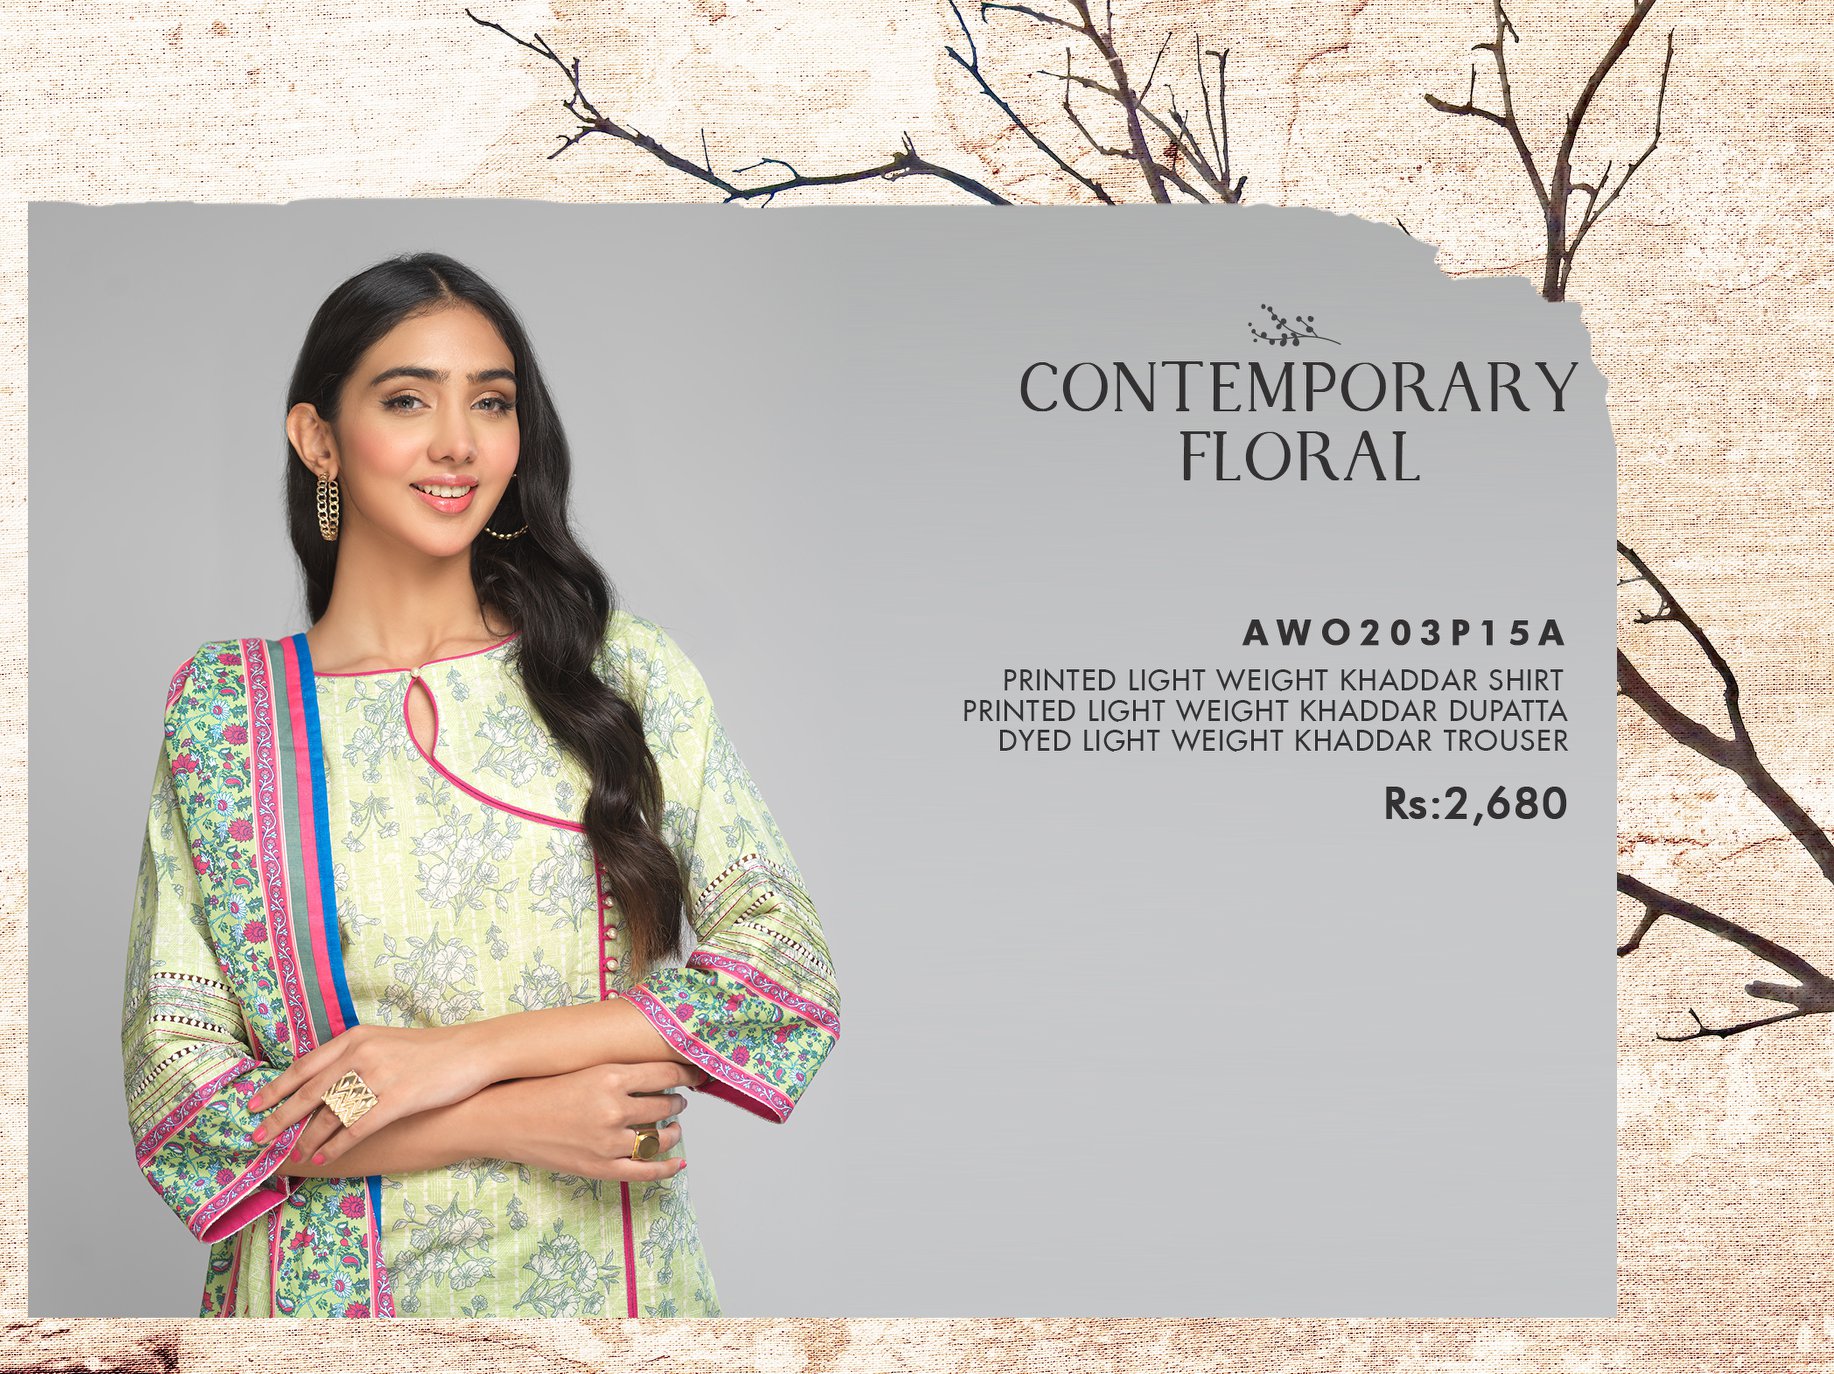 https://dressesglobe.com/wp-content/uploads/2020/12/Satrangi-contemporary-floral-winter-dresses.jpg